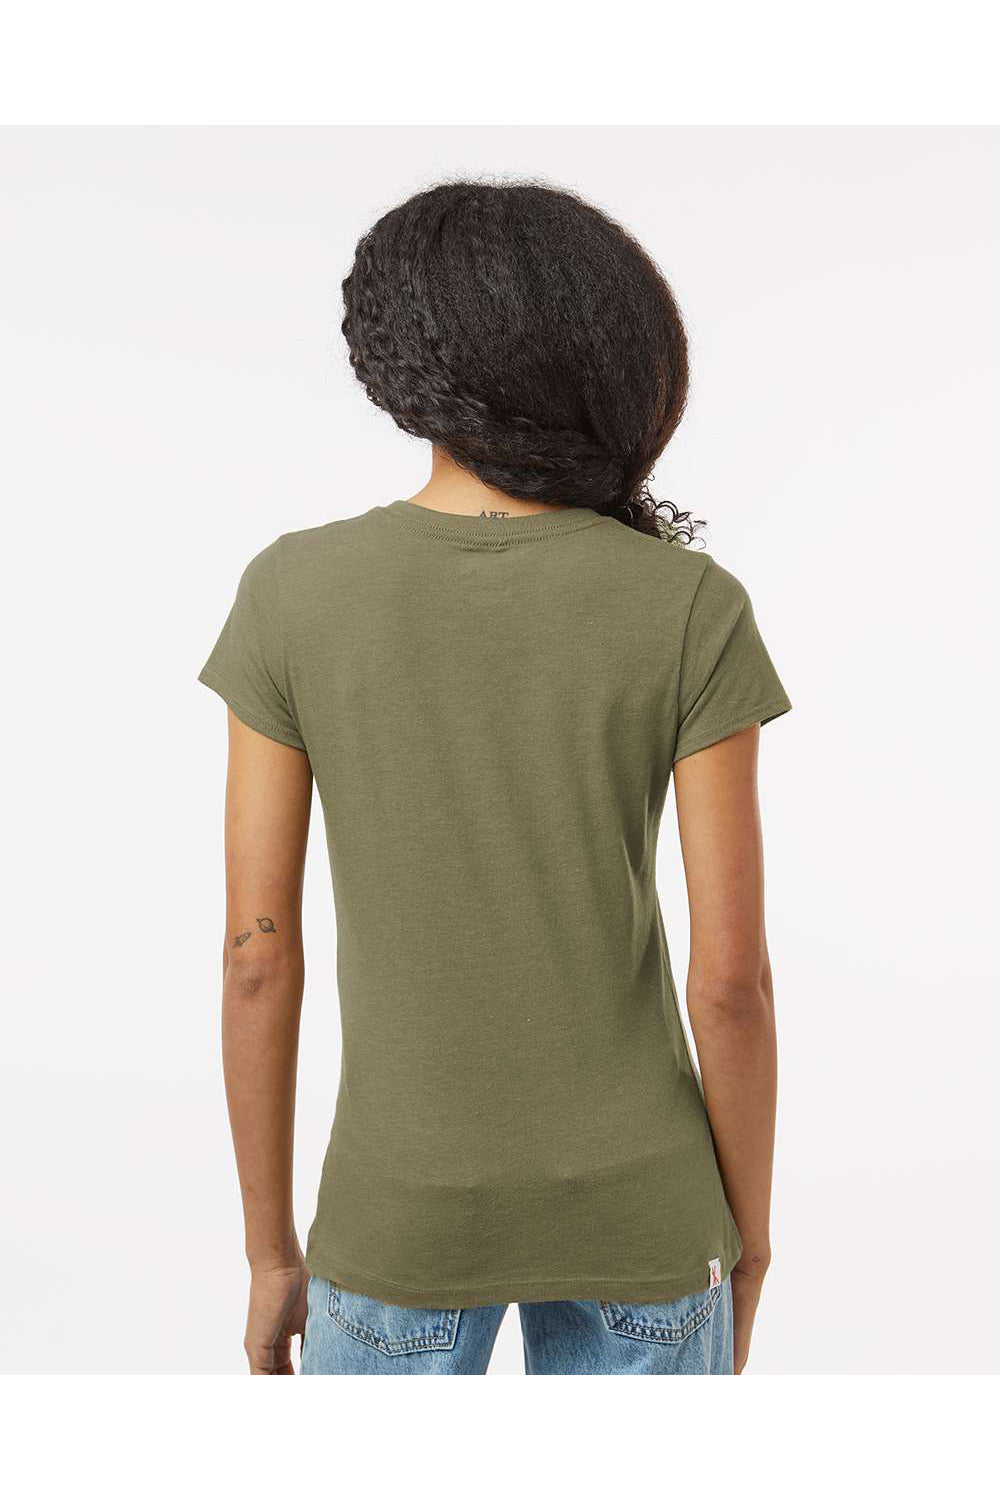 Kastlfel 2011 Womens RecycledSoft Short Sleeve V-Neck T-Shirt Moss Green Model Back